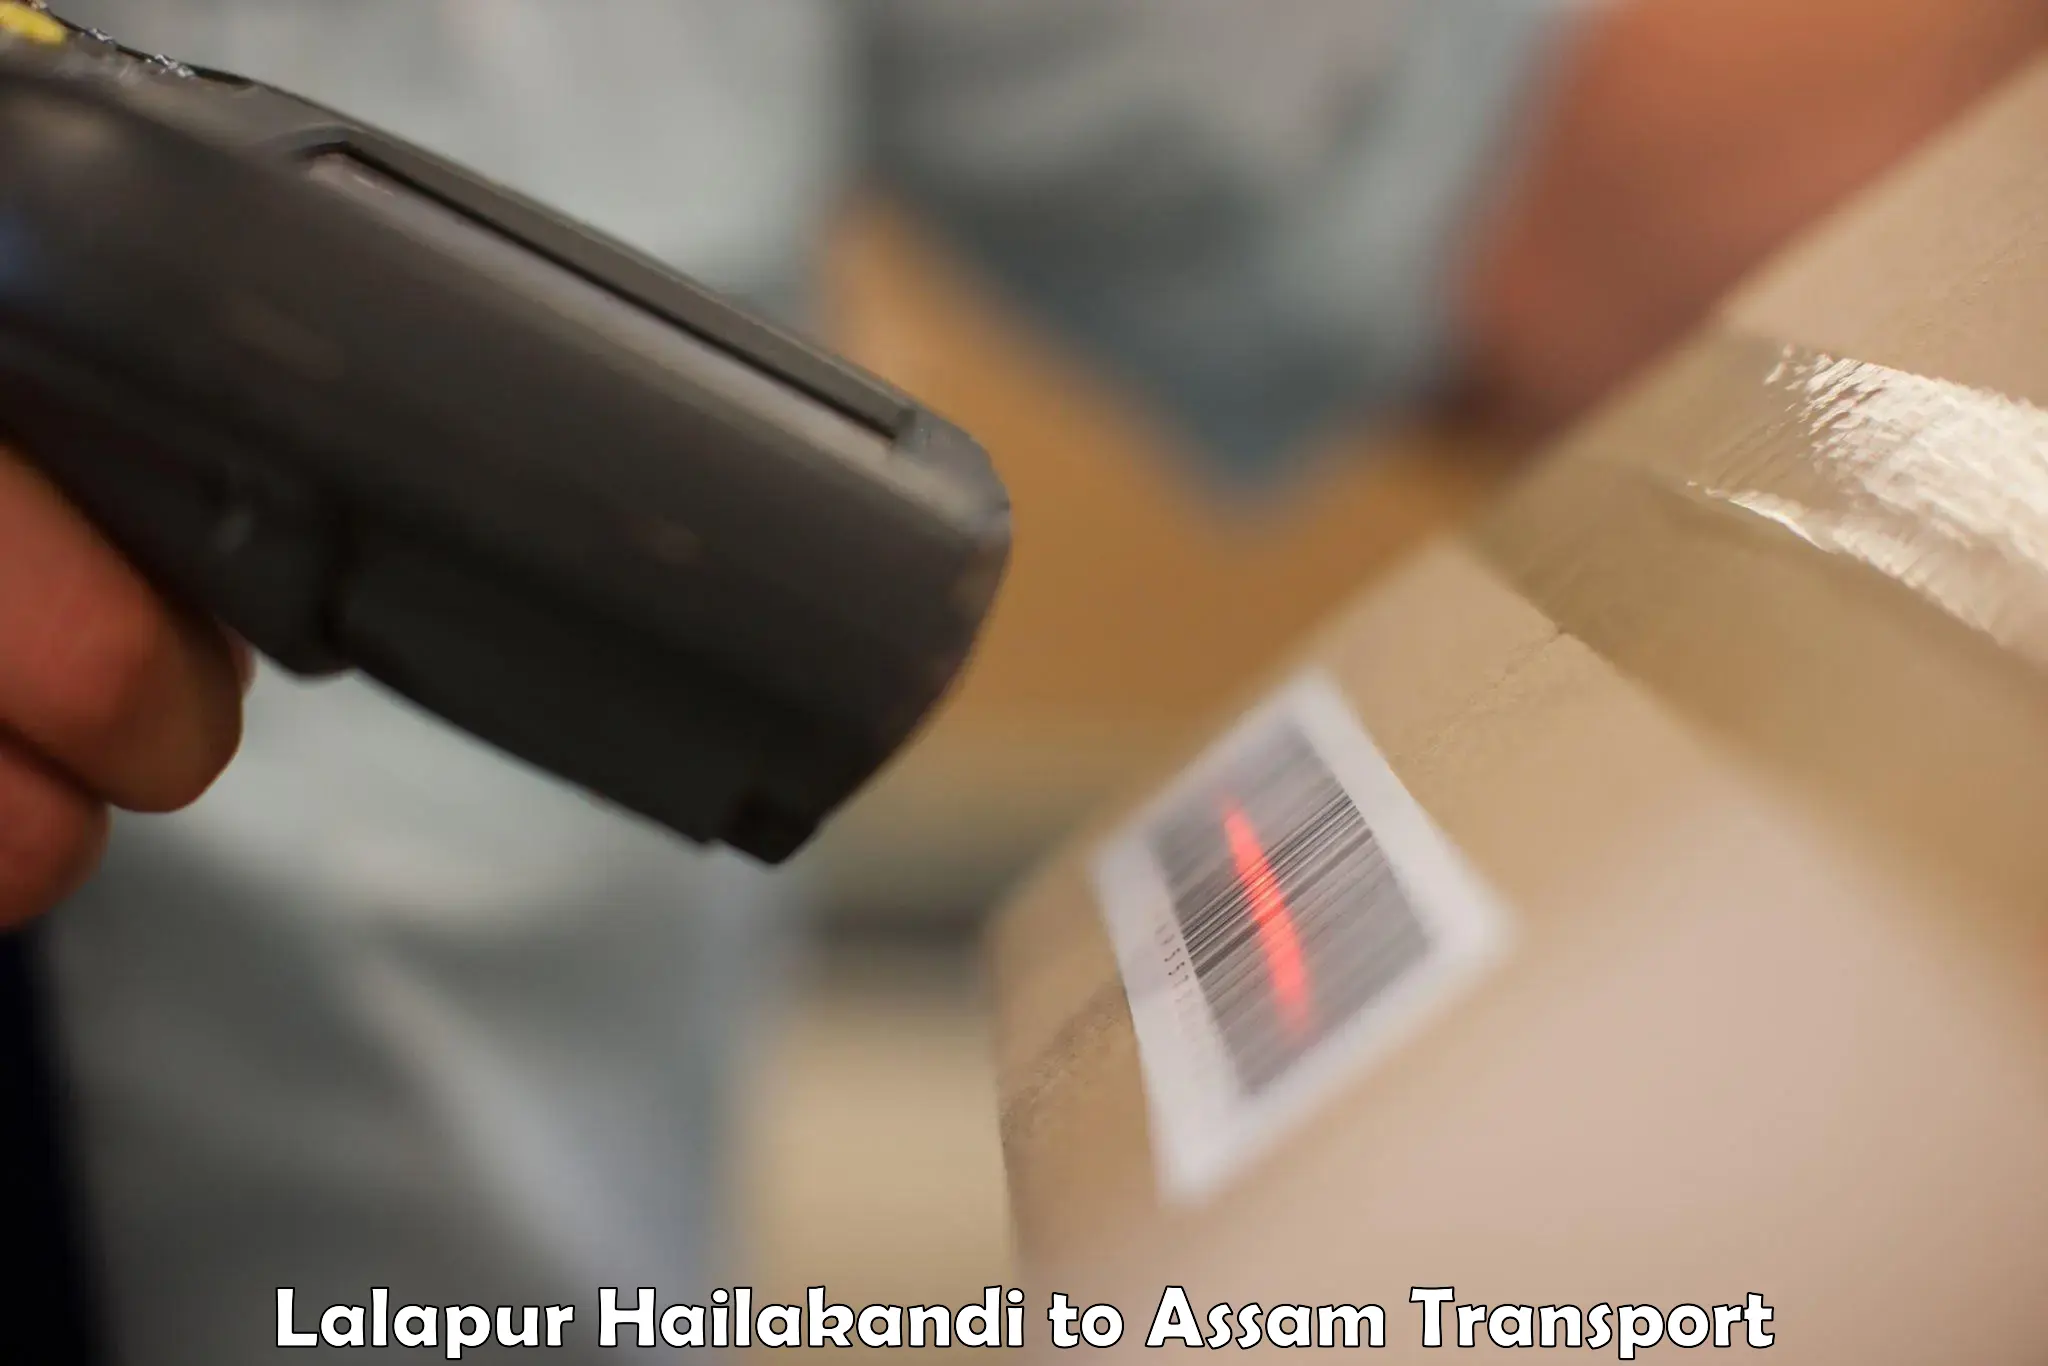 Transport in sharing Lalapur Hailakandi to Amoni